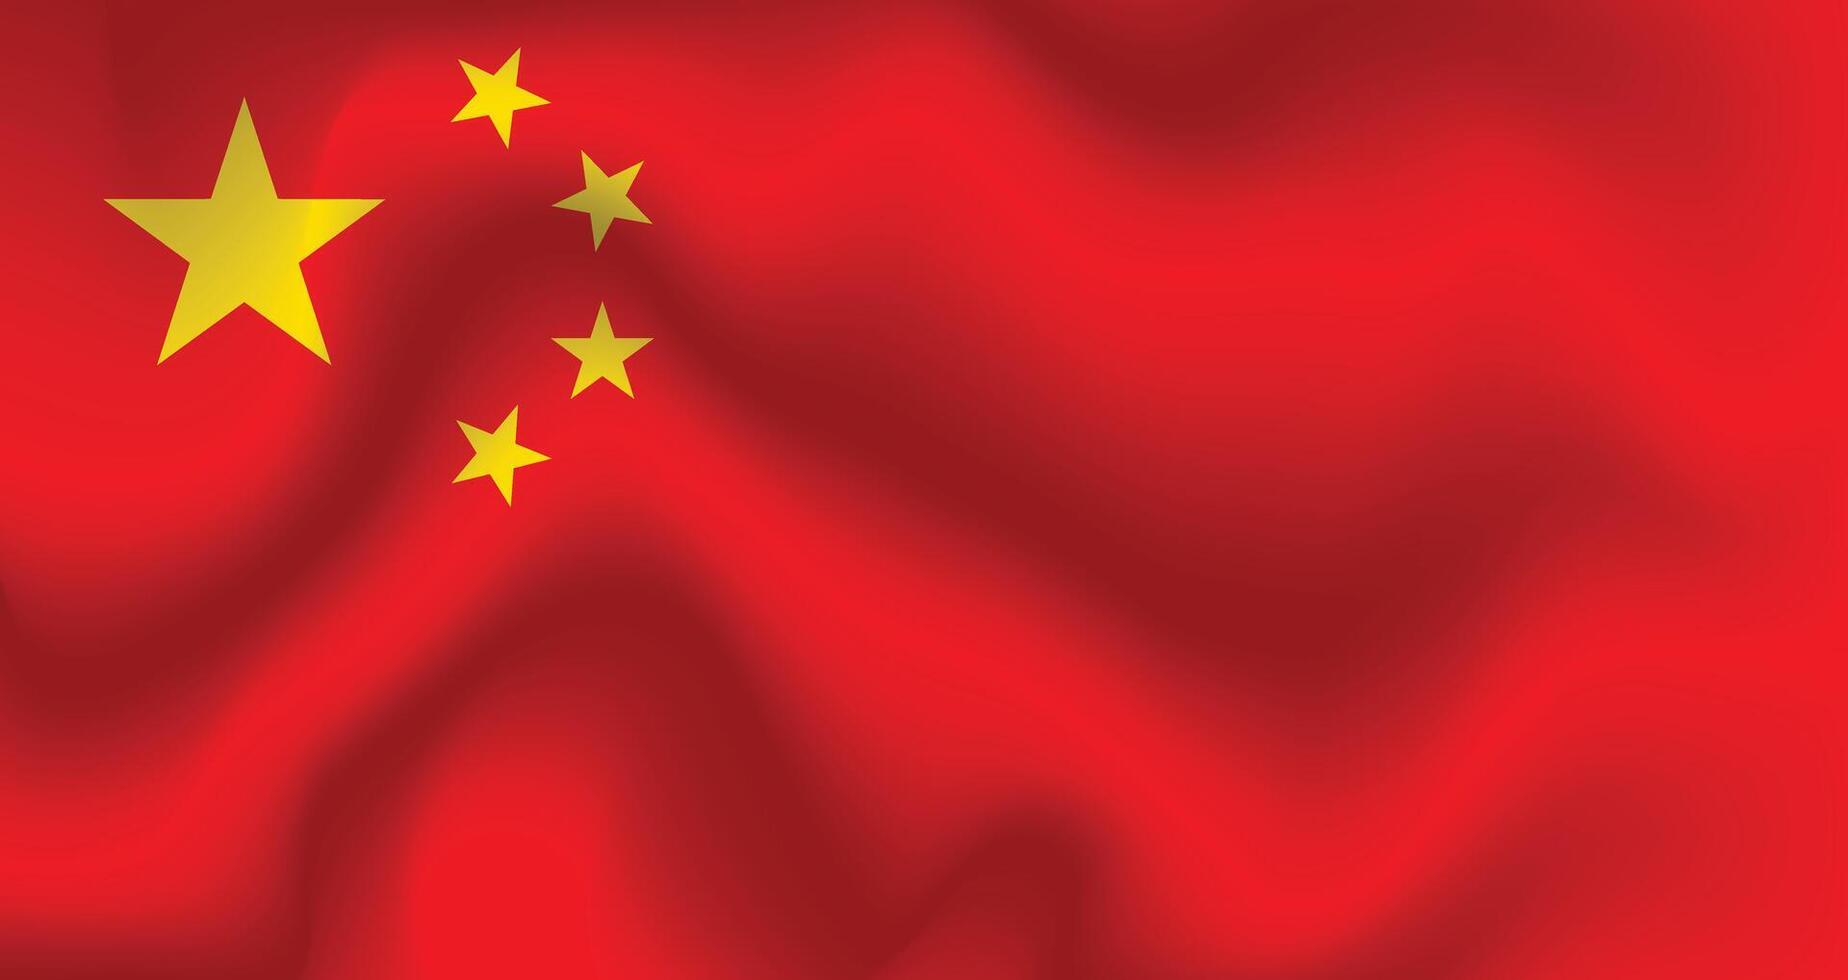 Flat Illustration of Chinese flag. China national flag design. China wave flag. vector